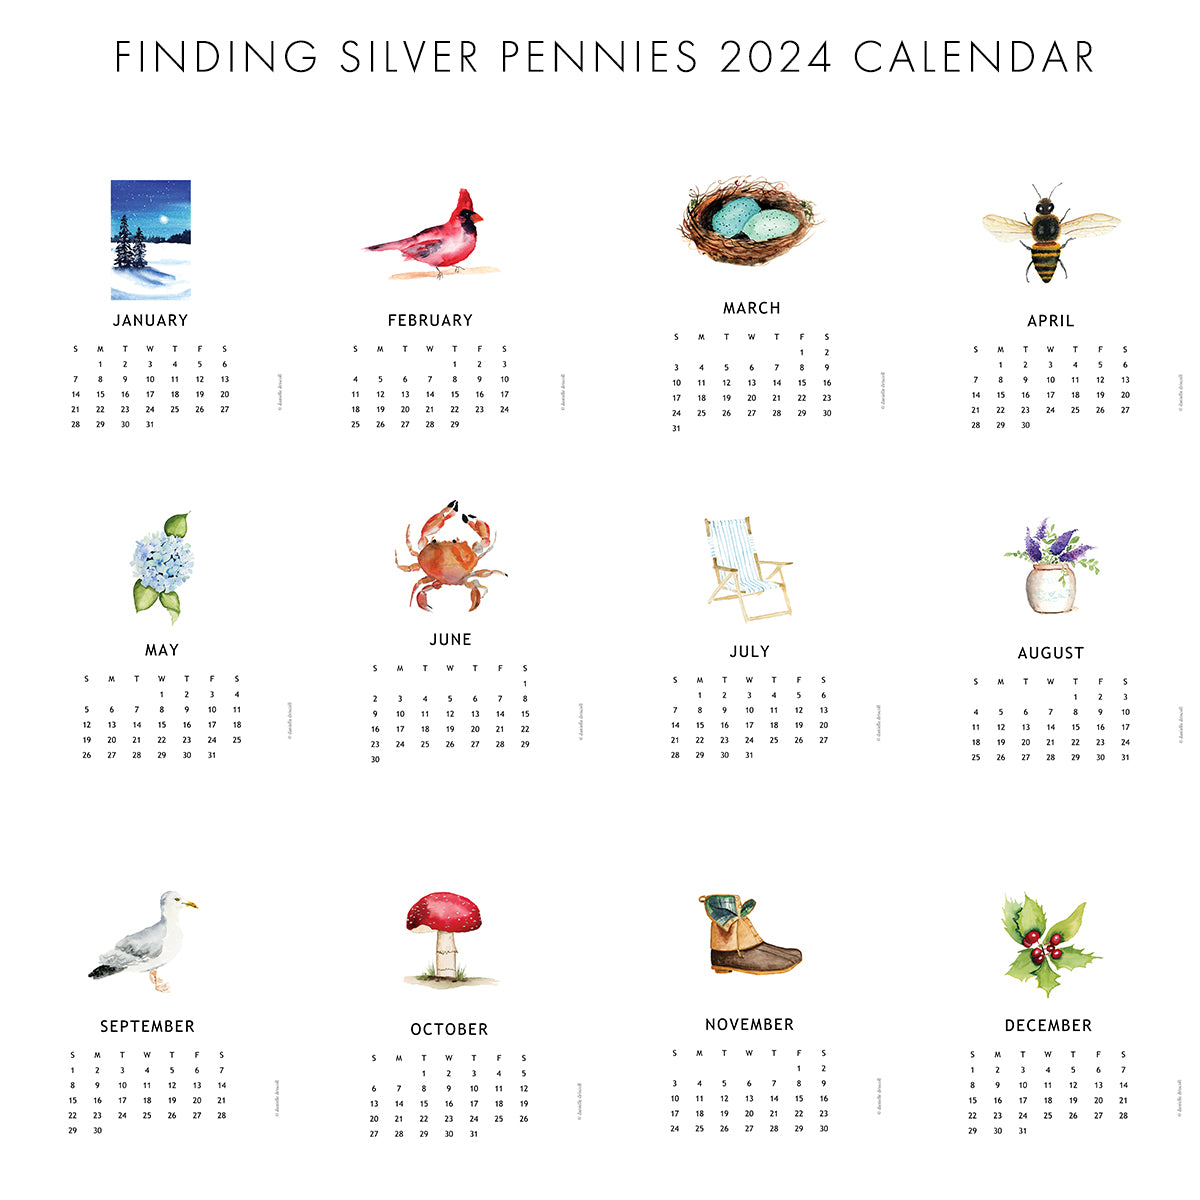 Watercolor Desk Calendar - at a glance preview | Finding Silver Pennies  #watercolorcalendar